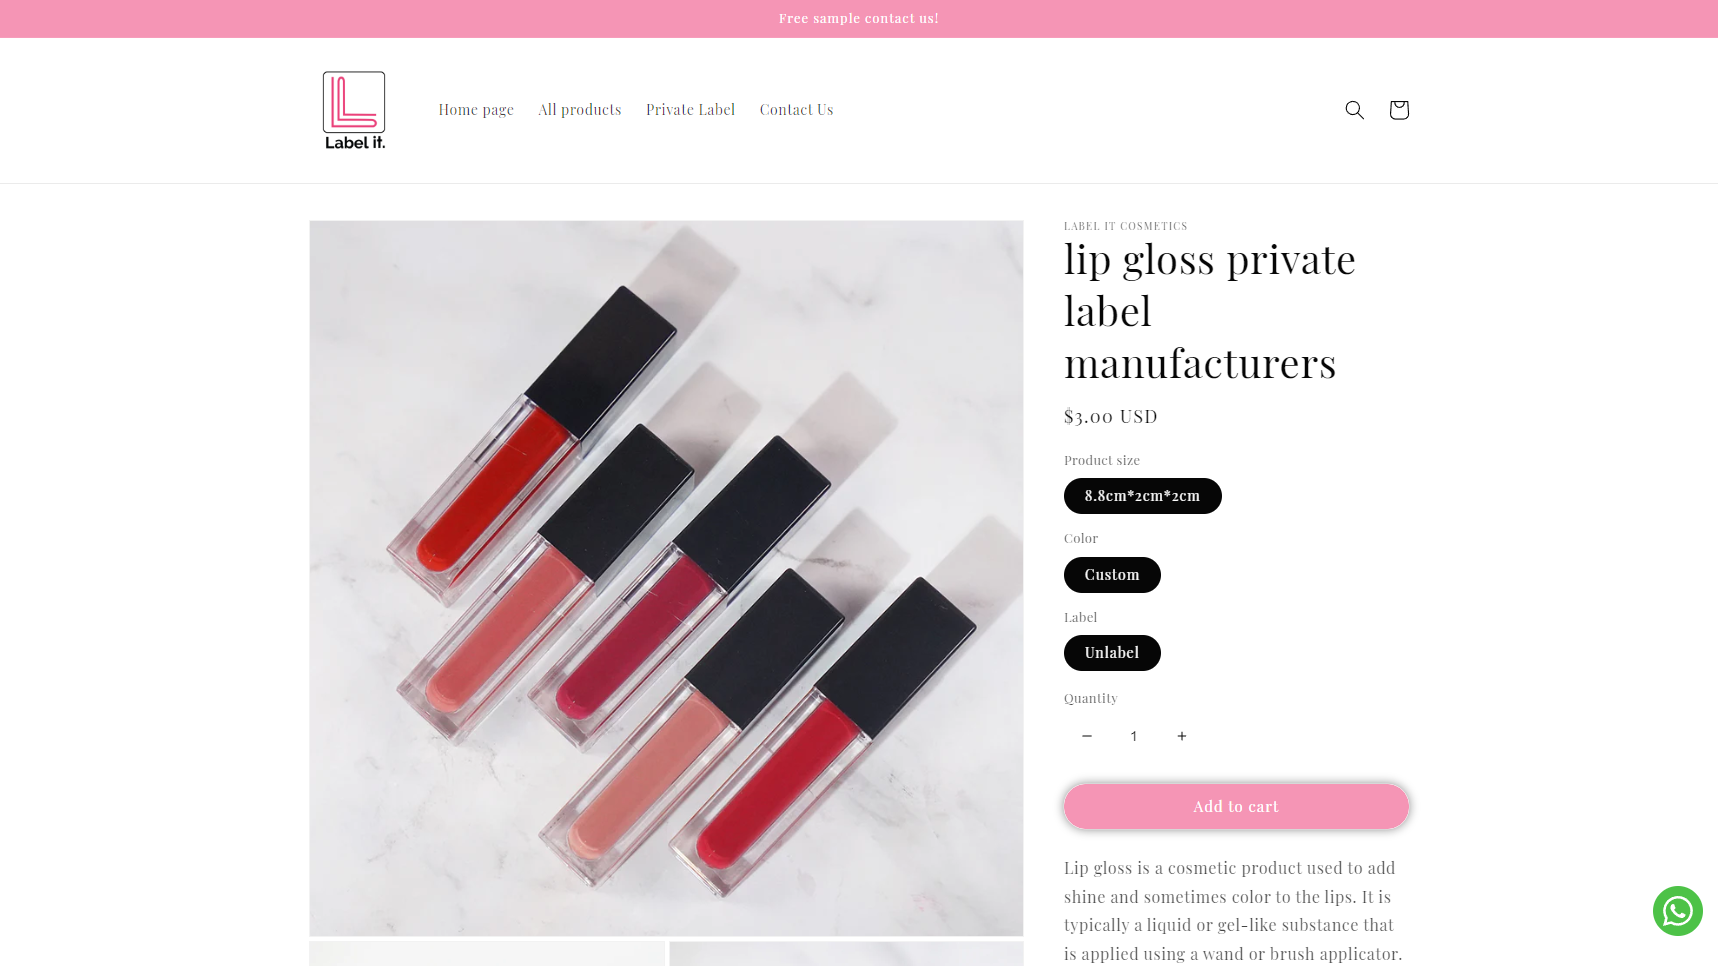 Label It Cosmetics - Lip Gloss Manufacturer